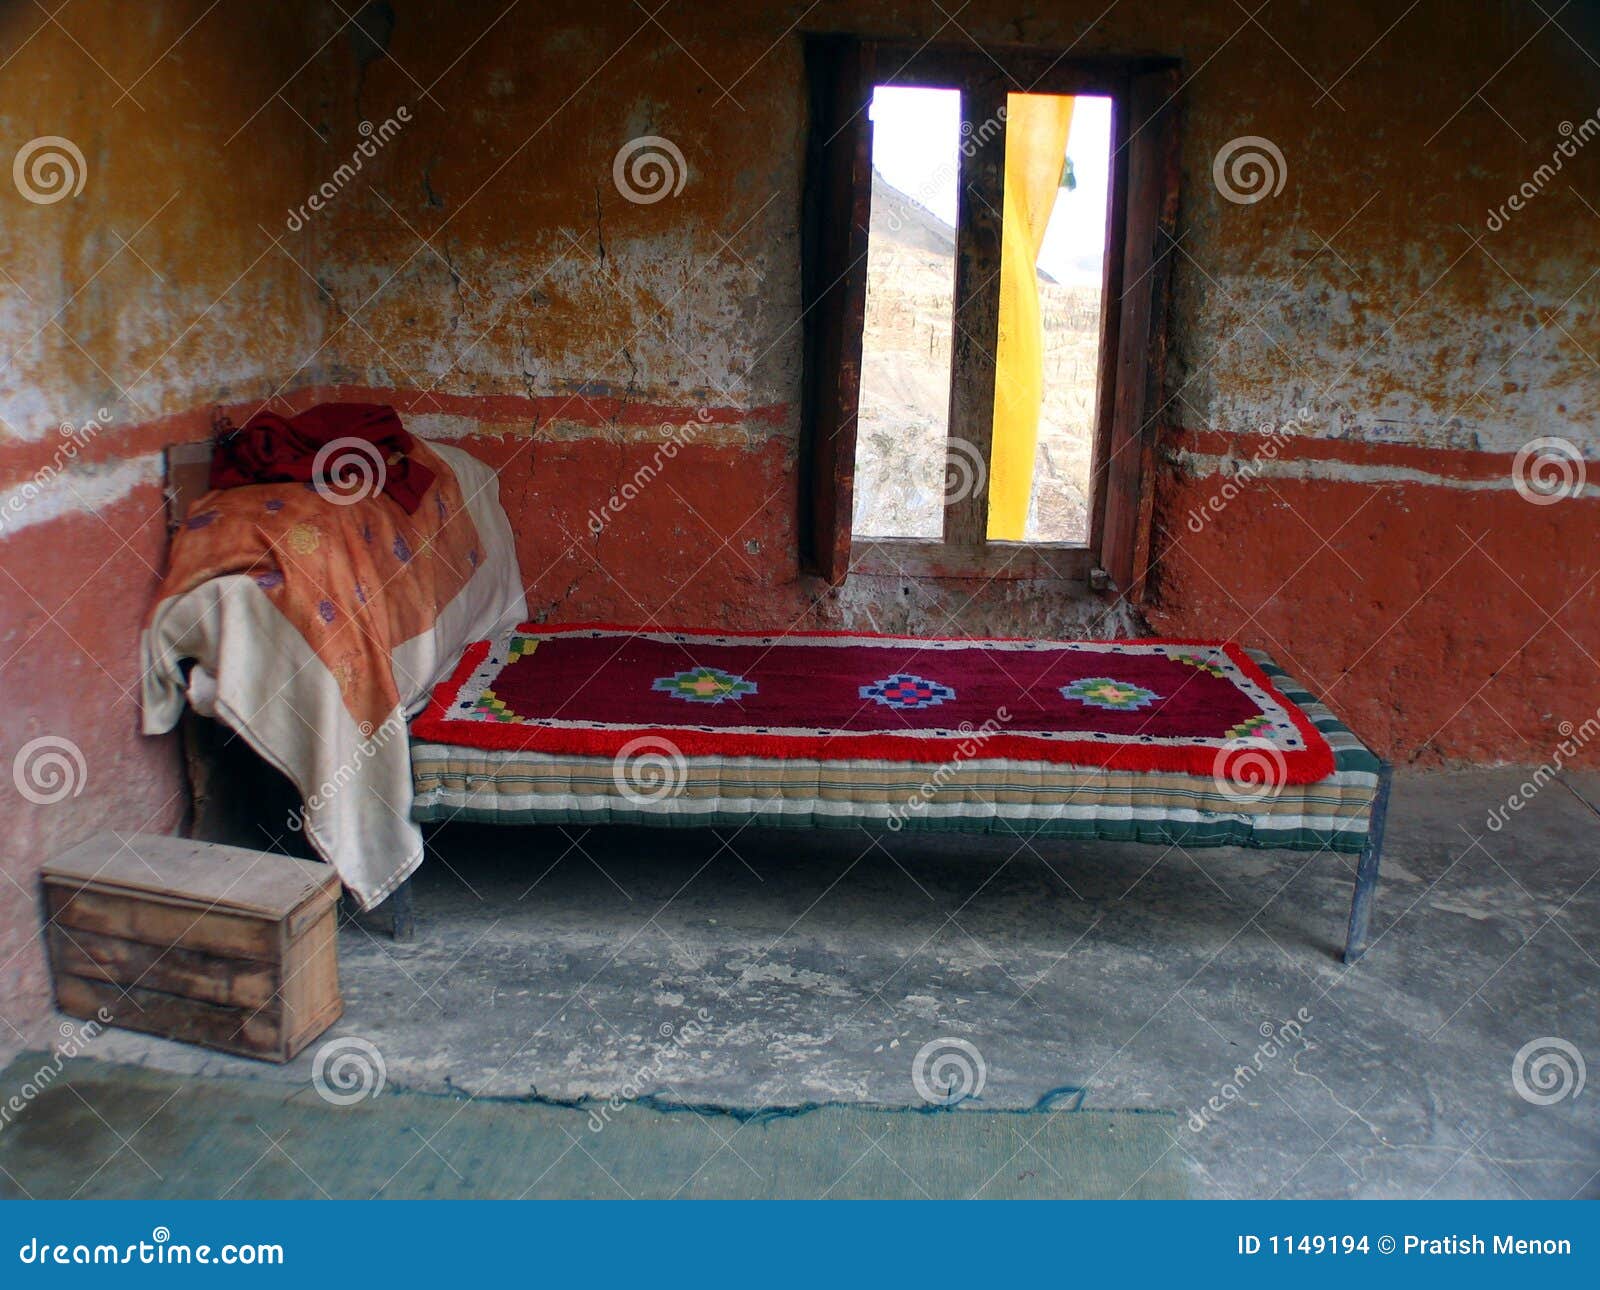 tranquil sanctum: the bedchamber of the head lama at lamayuru monastery